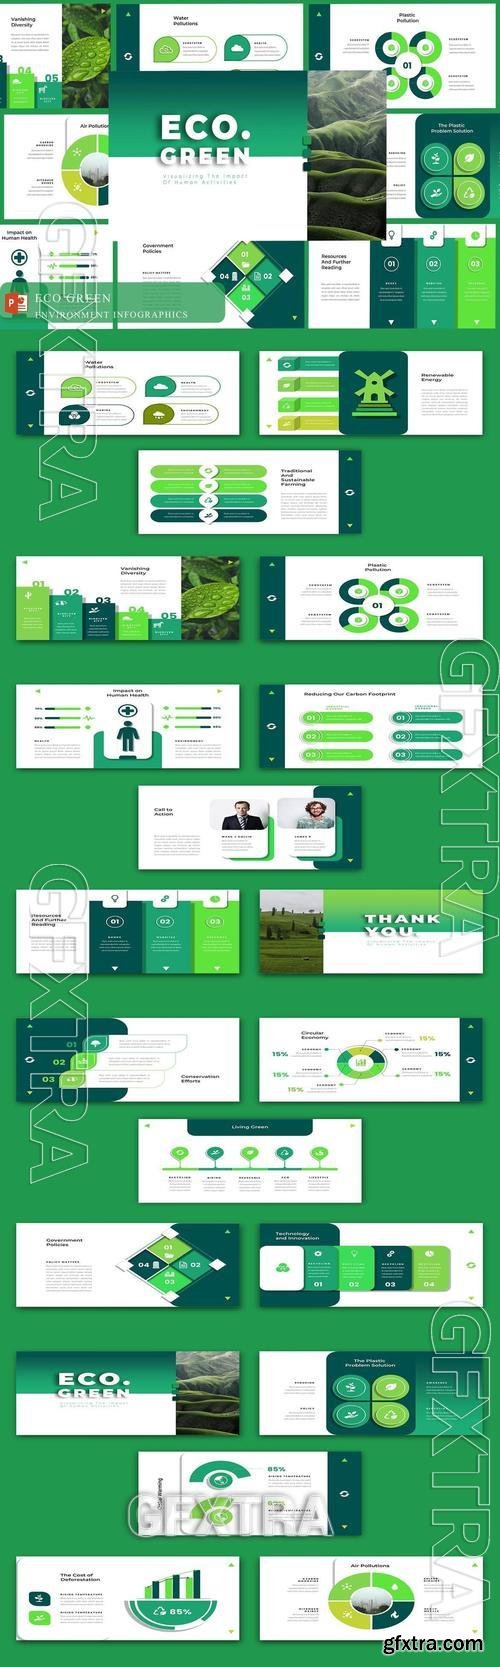 Ecogreen Environmental Infographic Powerpoint JJAFCRX